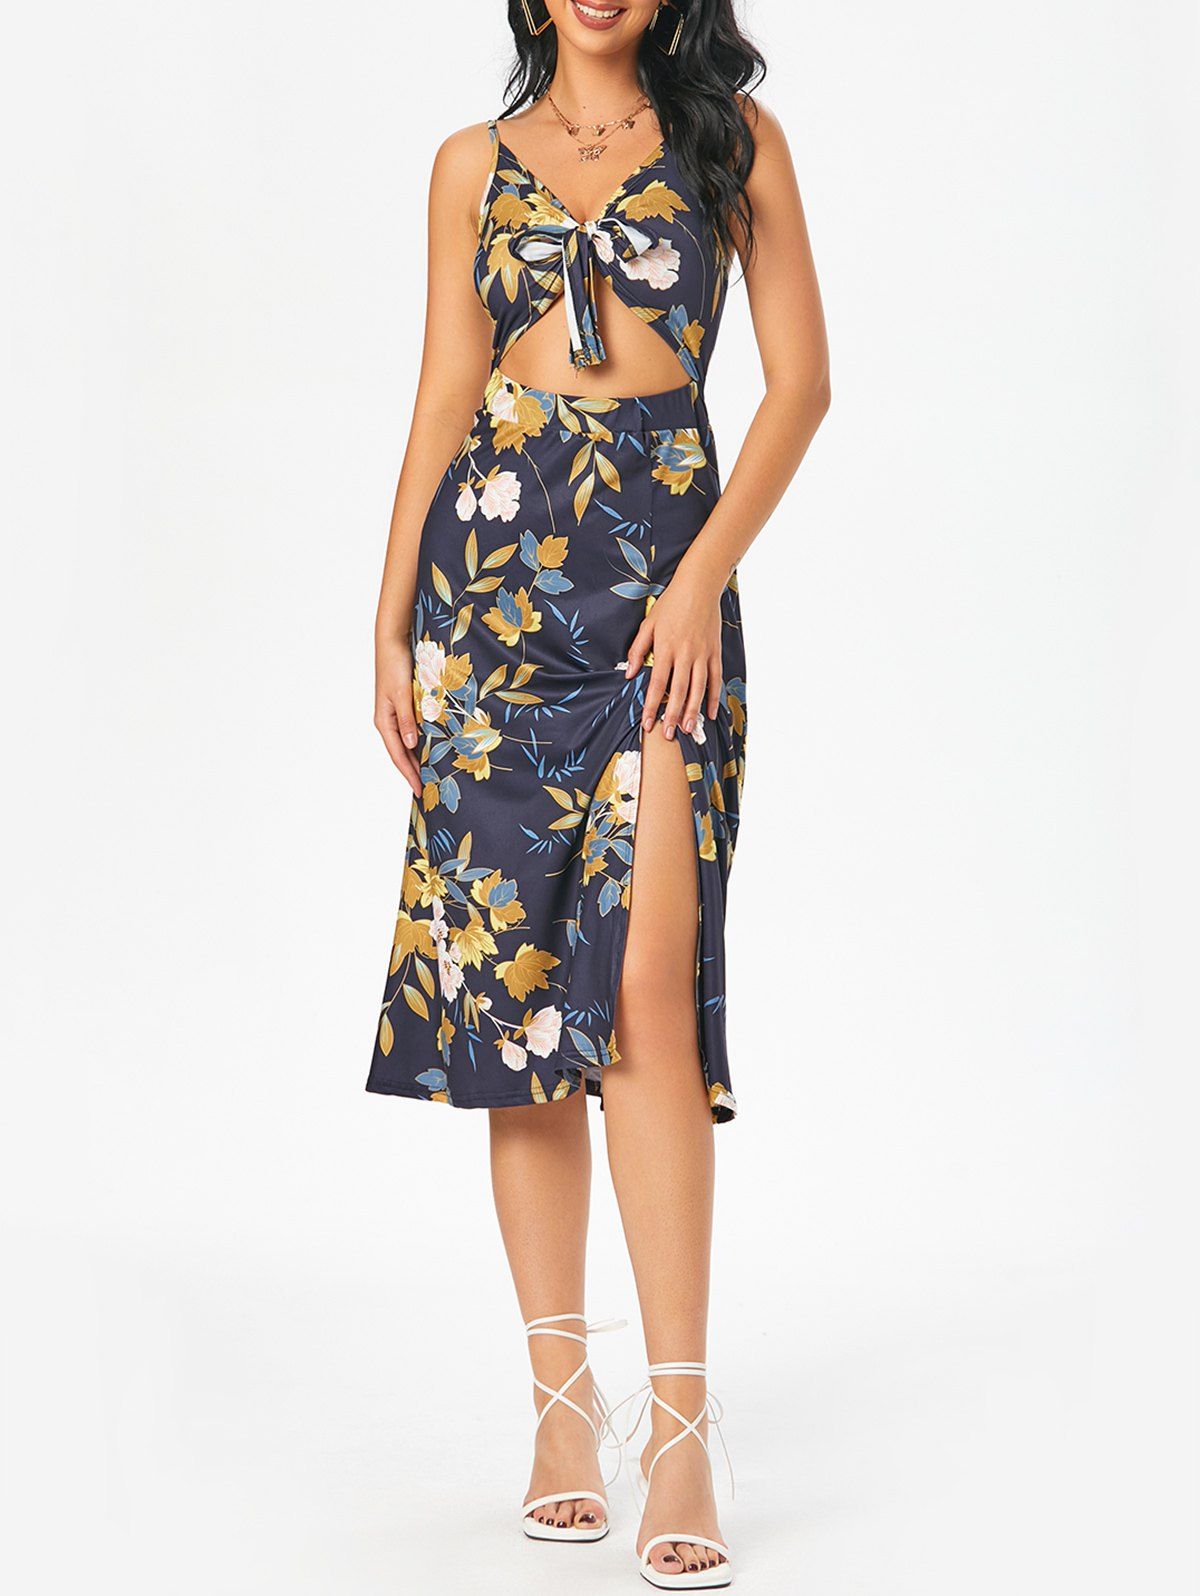 Floral Print Sundress Tied Cut Out Slit Midi Dress - DEEP BLUE L